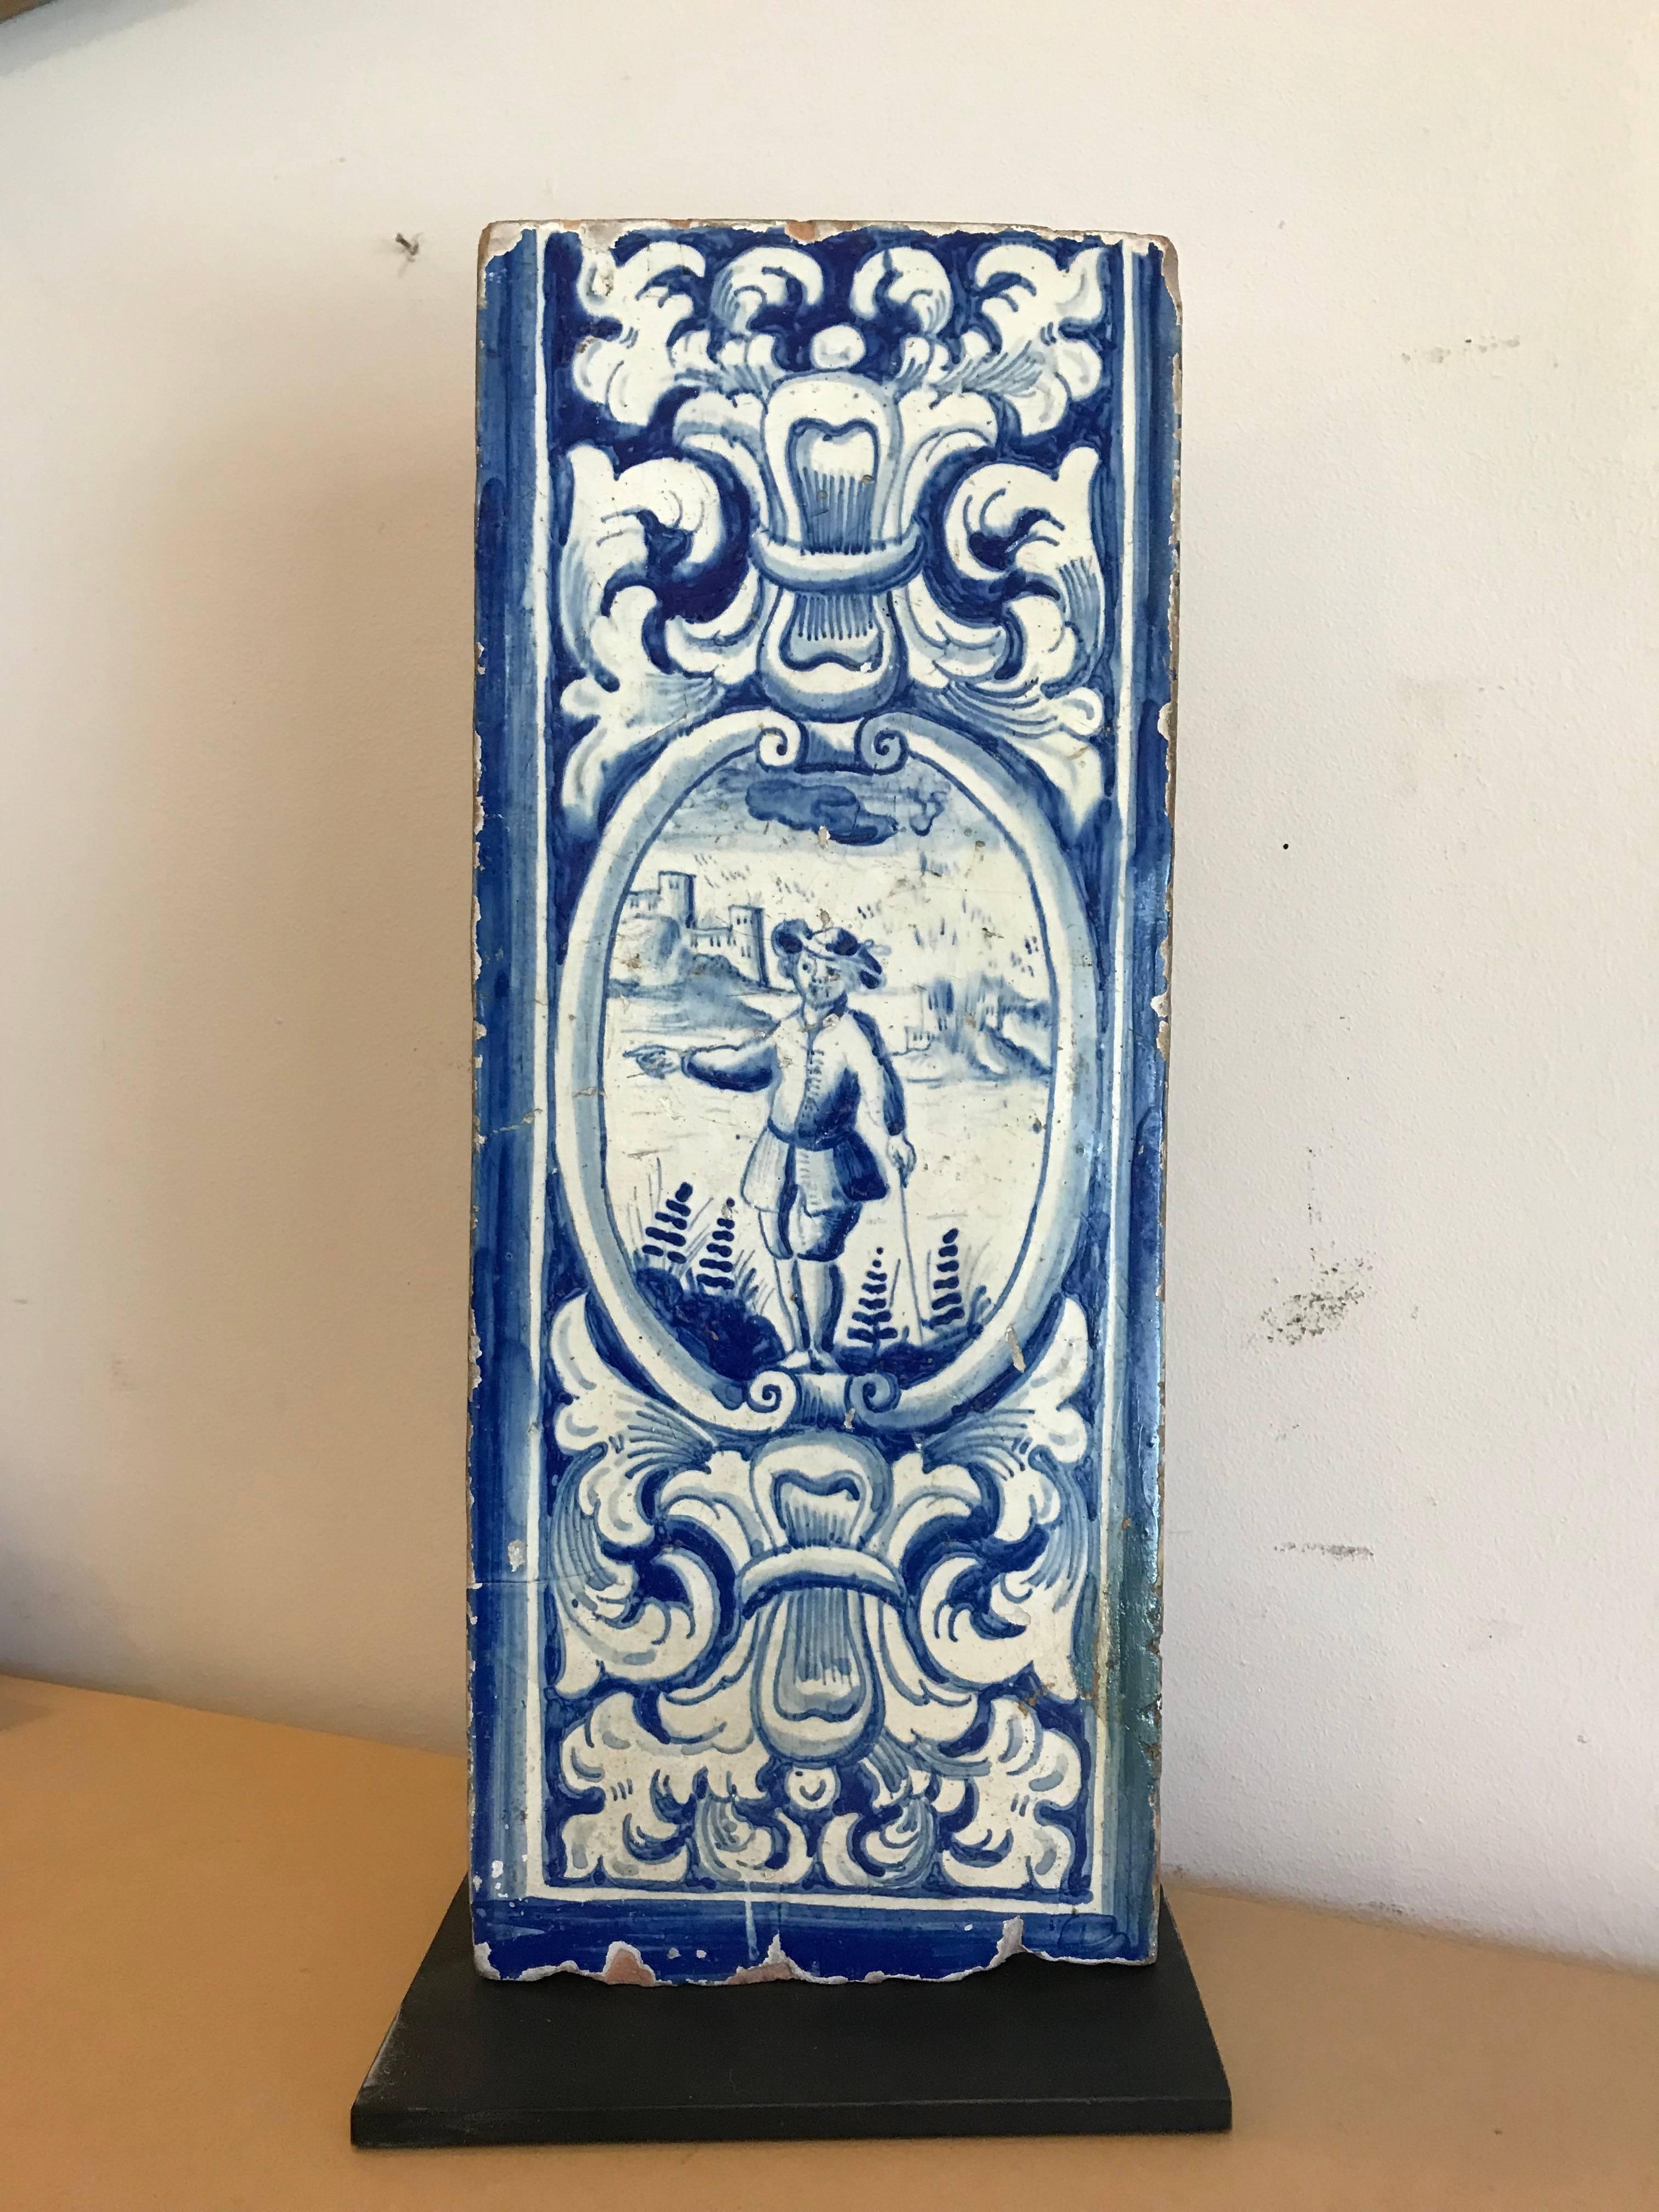 18th Century Dutch Delft Blue and White Glazed Ceramic Stove Tile 2